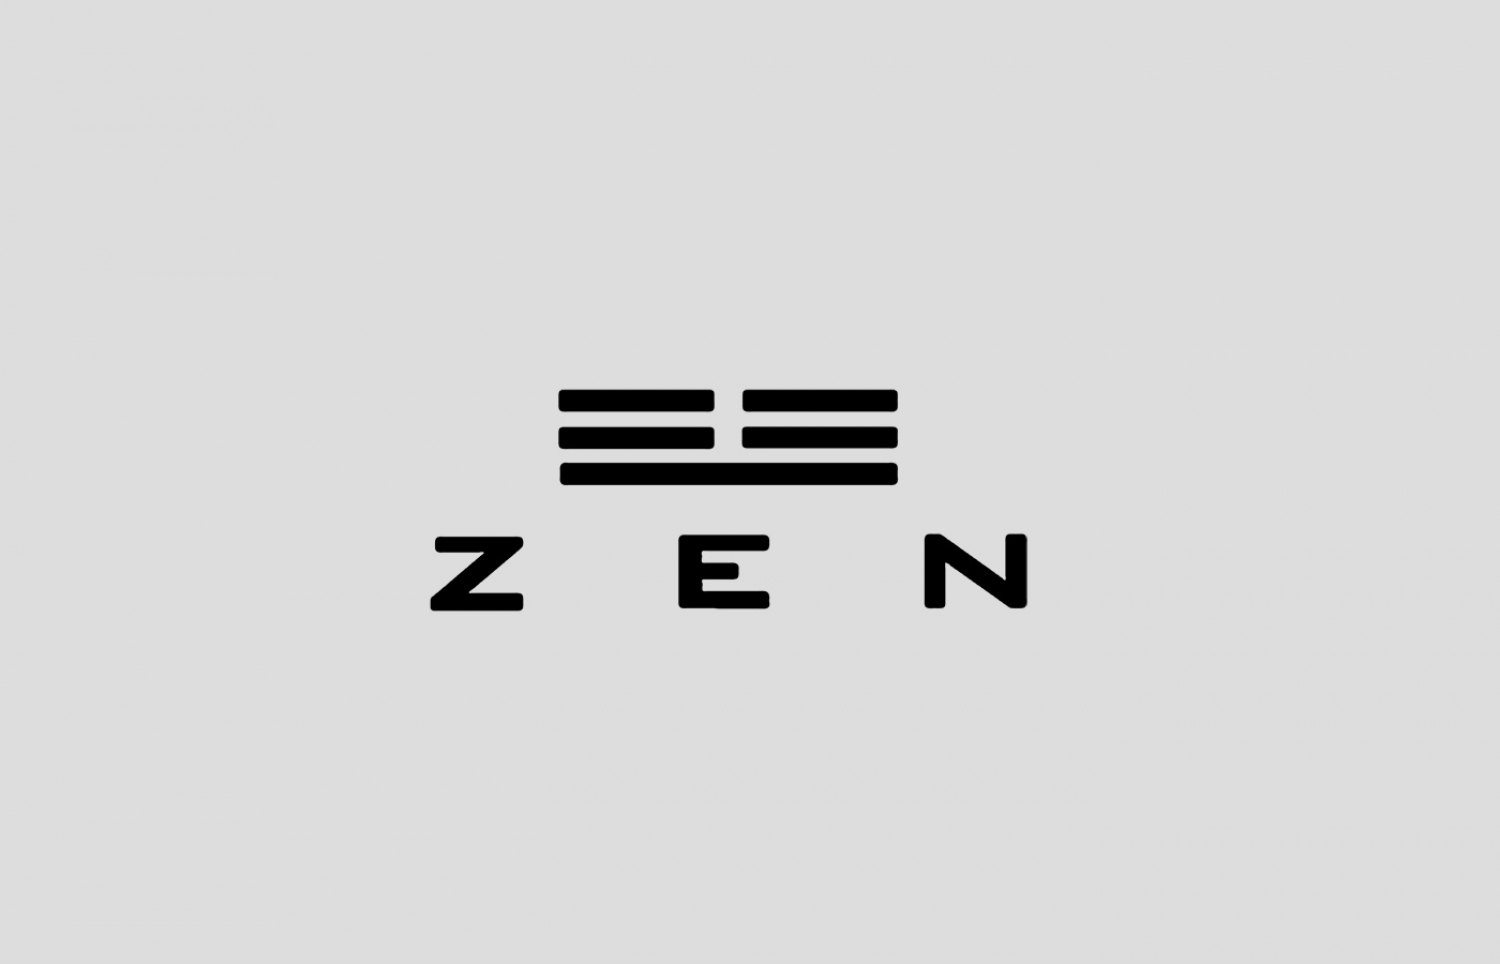 Ken diamond - Zen Design